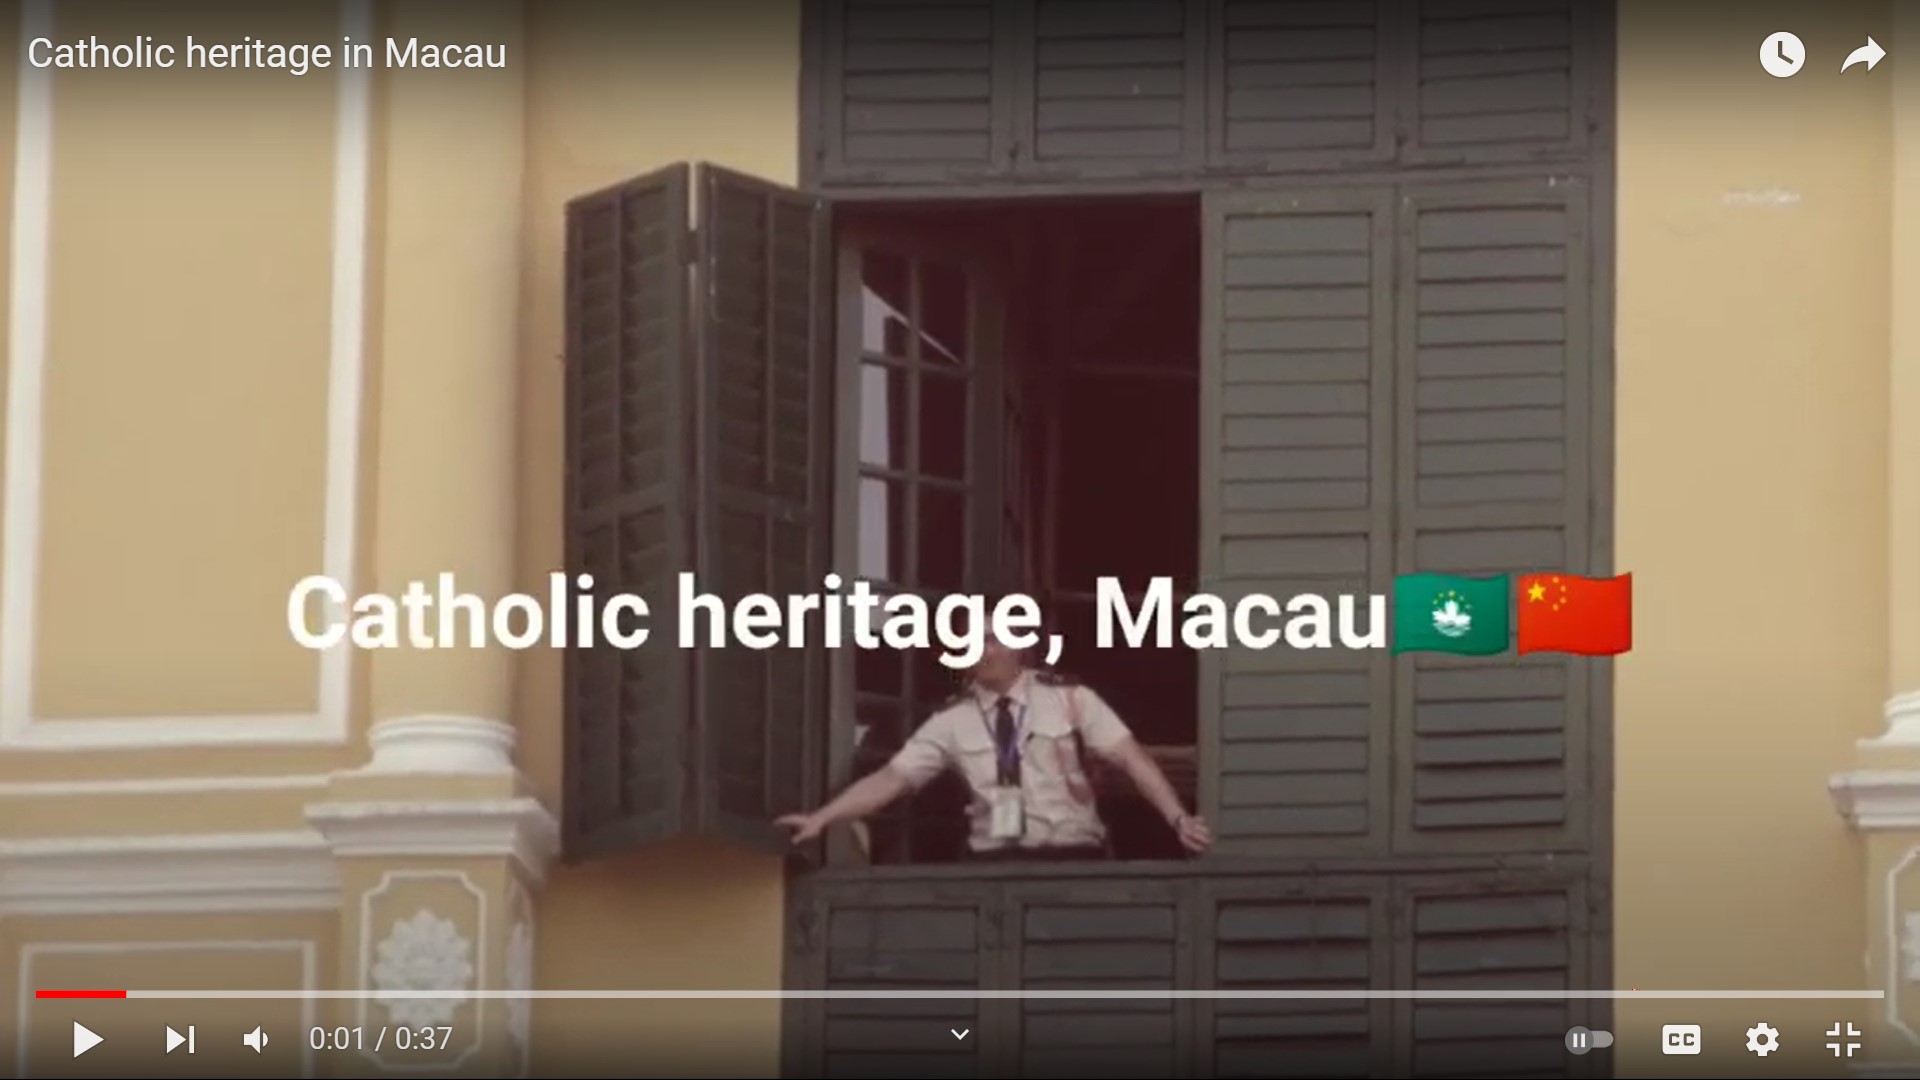 Frank’s “Catholic heritage in Macau” snapshots video